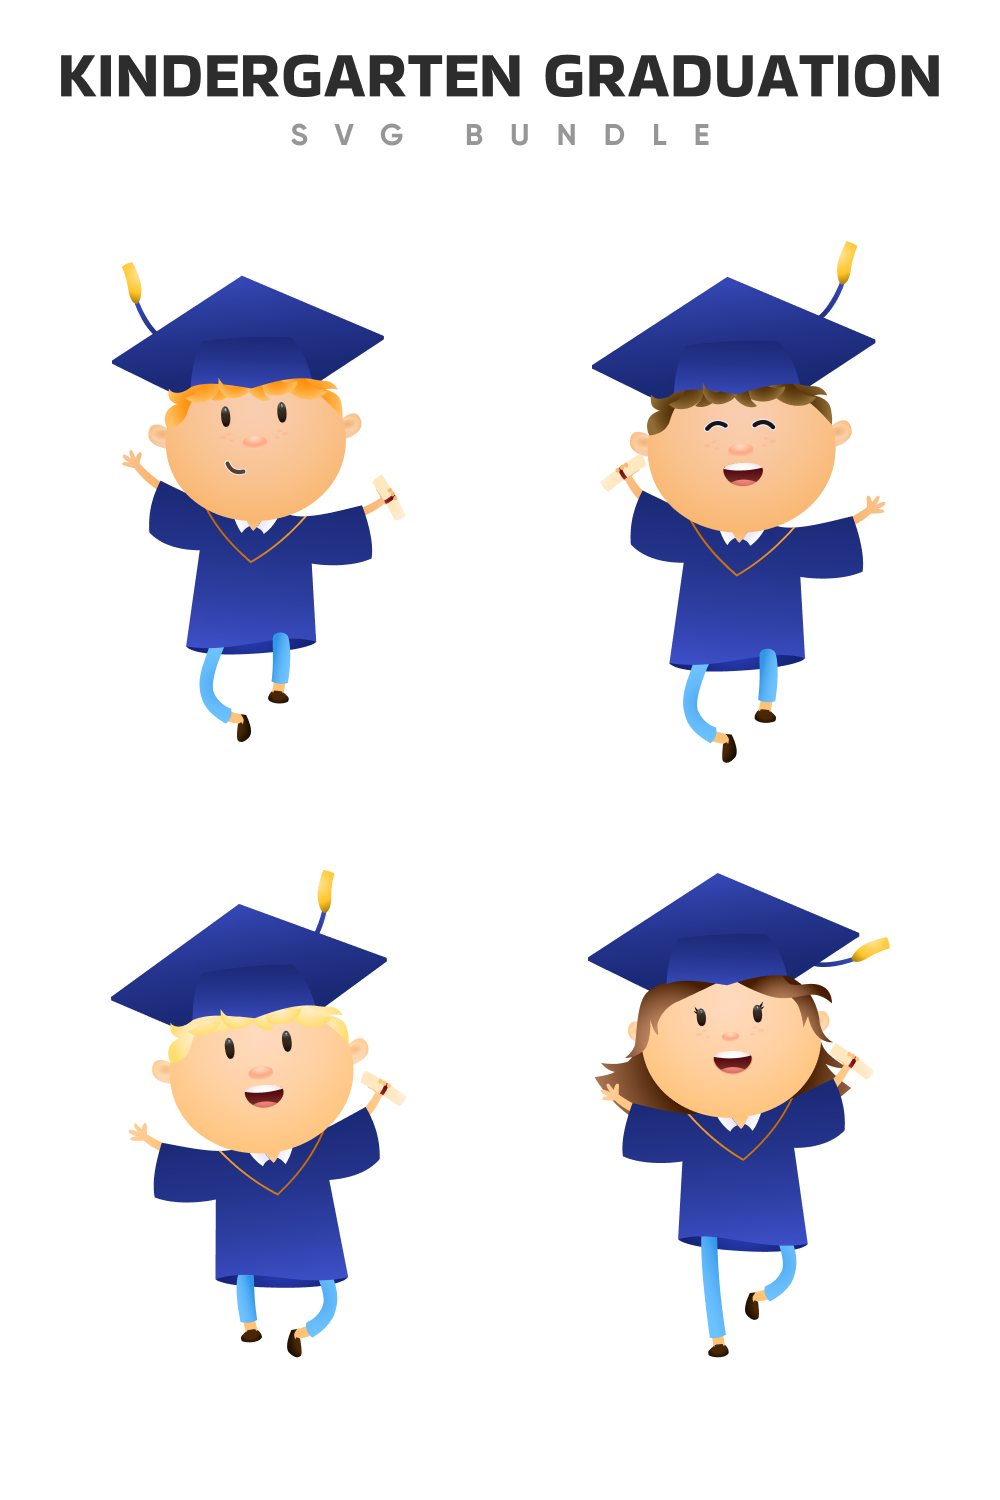 Children in a blue uniform are celebrating their graduation.